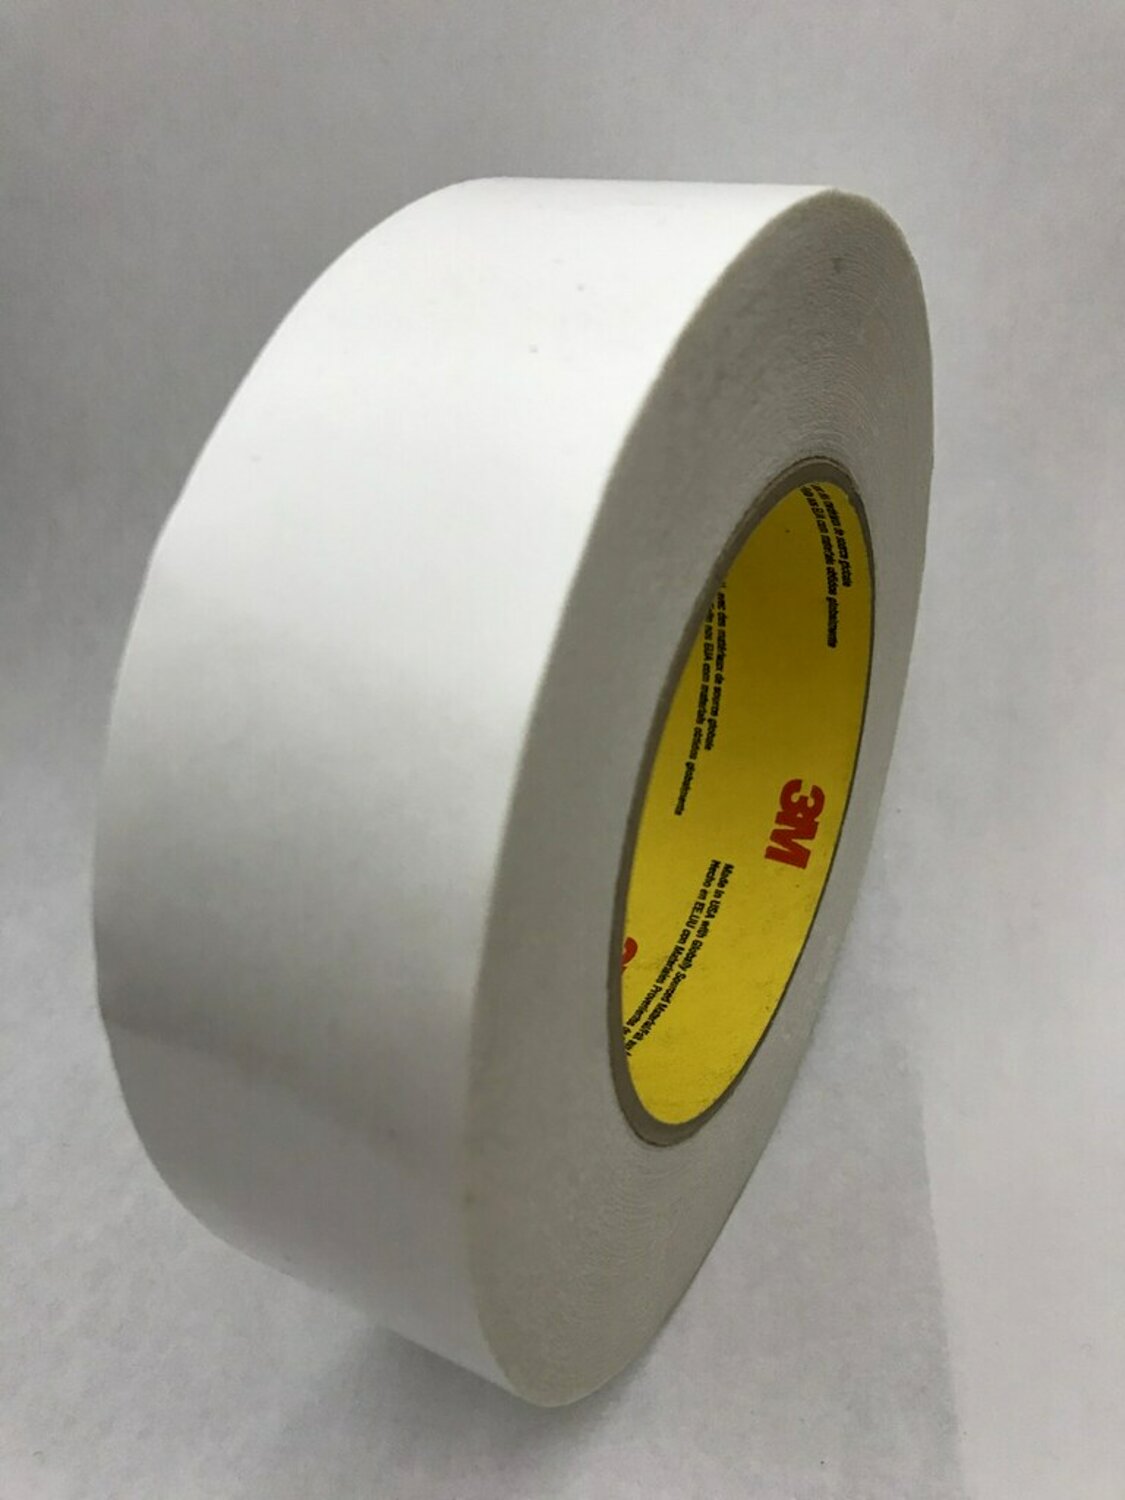 7100043856 - 3M Venture Tape Double Coated PET Tape 514CW, 37.12 mm x 54.8 m, 0.01
mm, 32 rolls per case